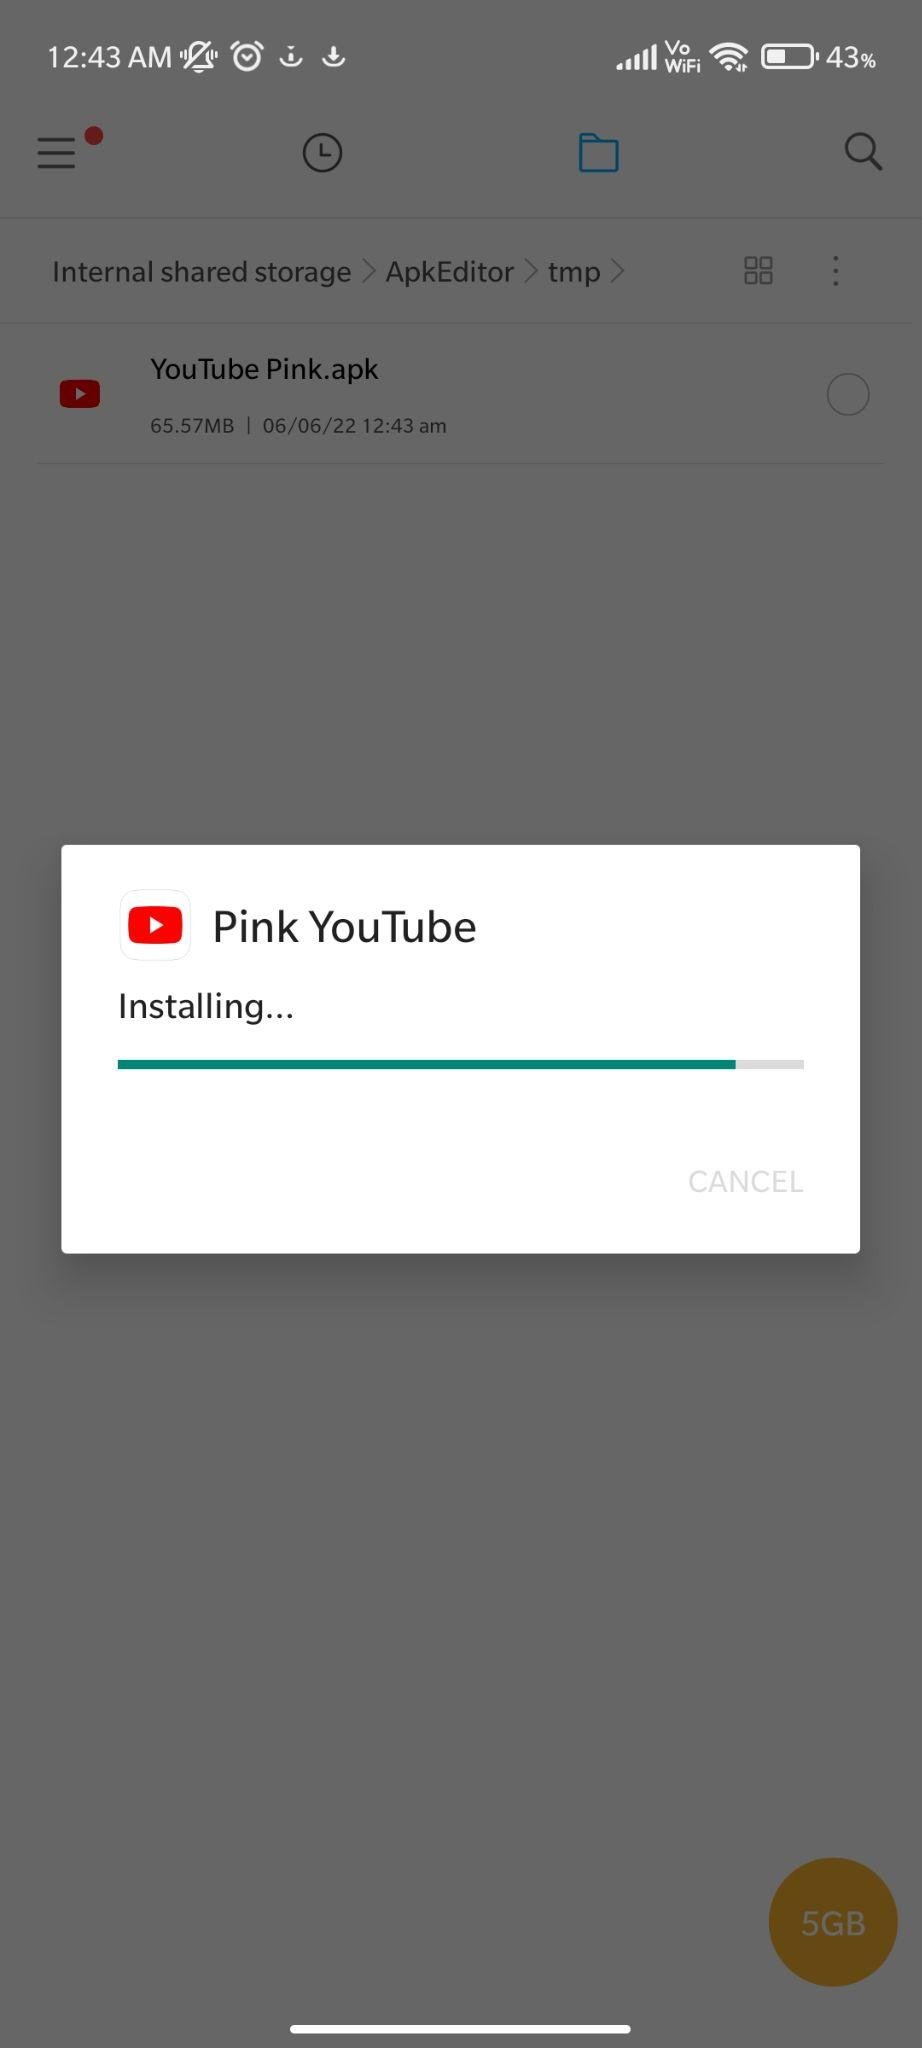 YouTube Pink apk installing